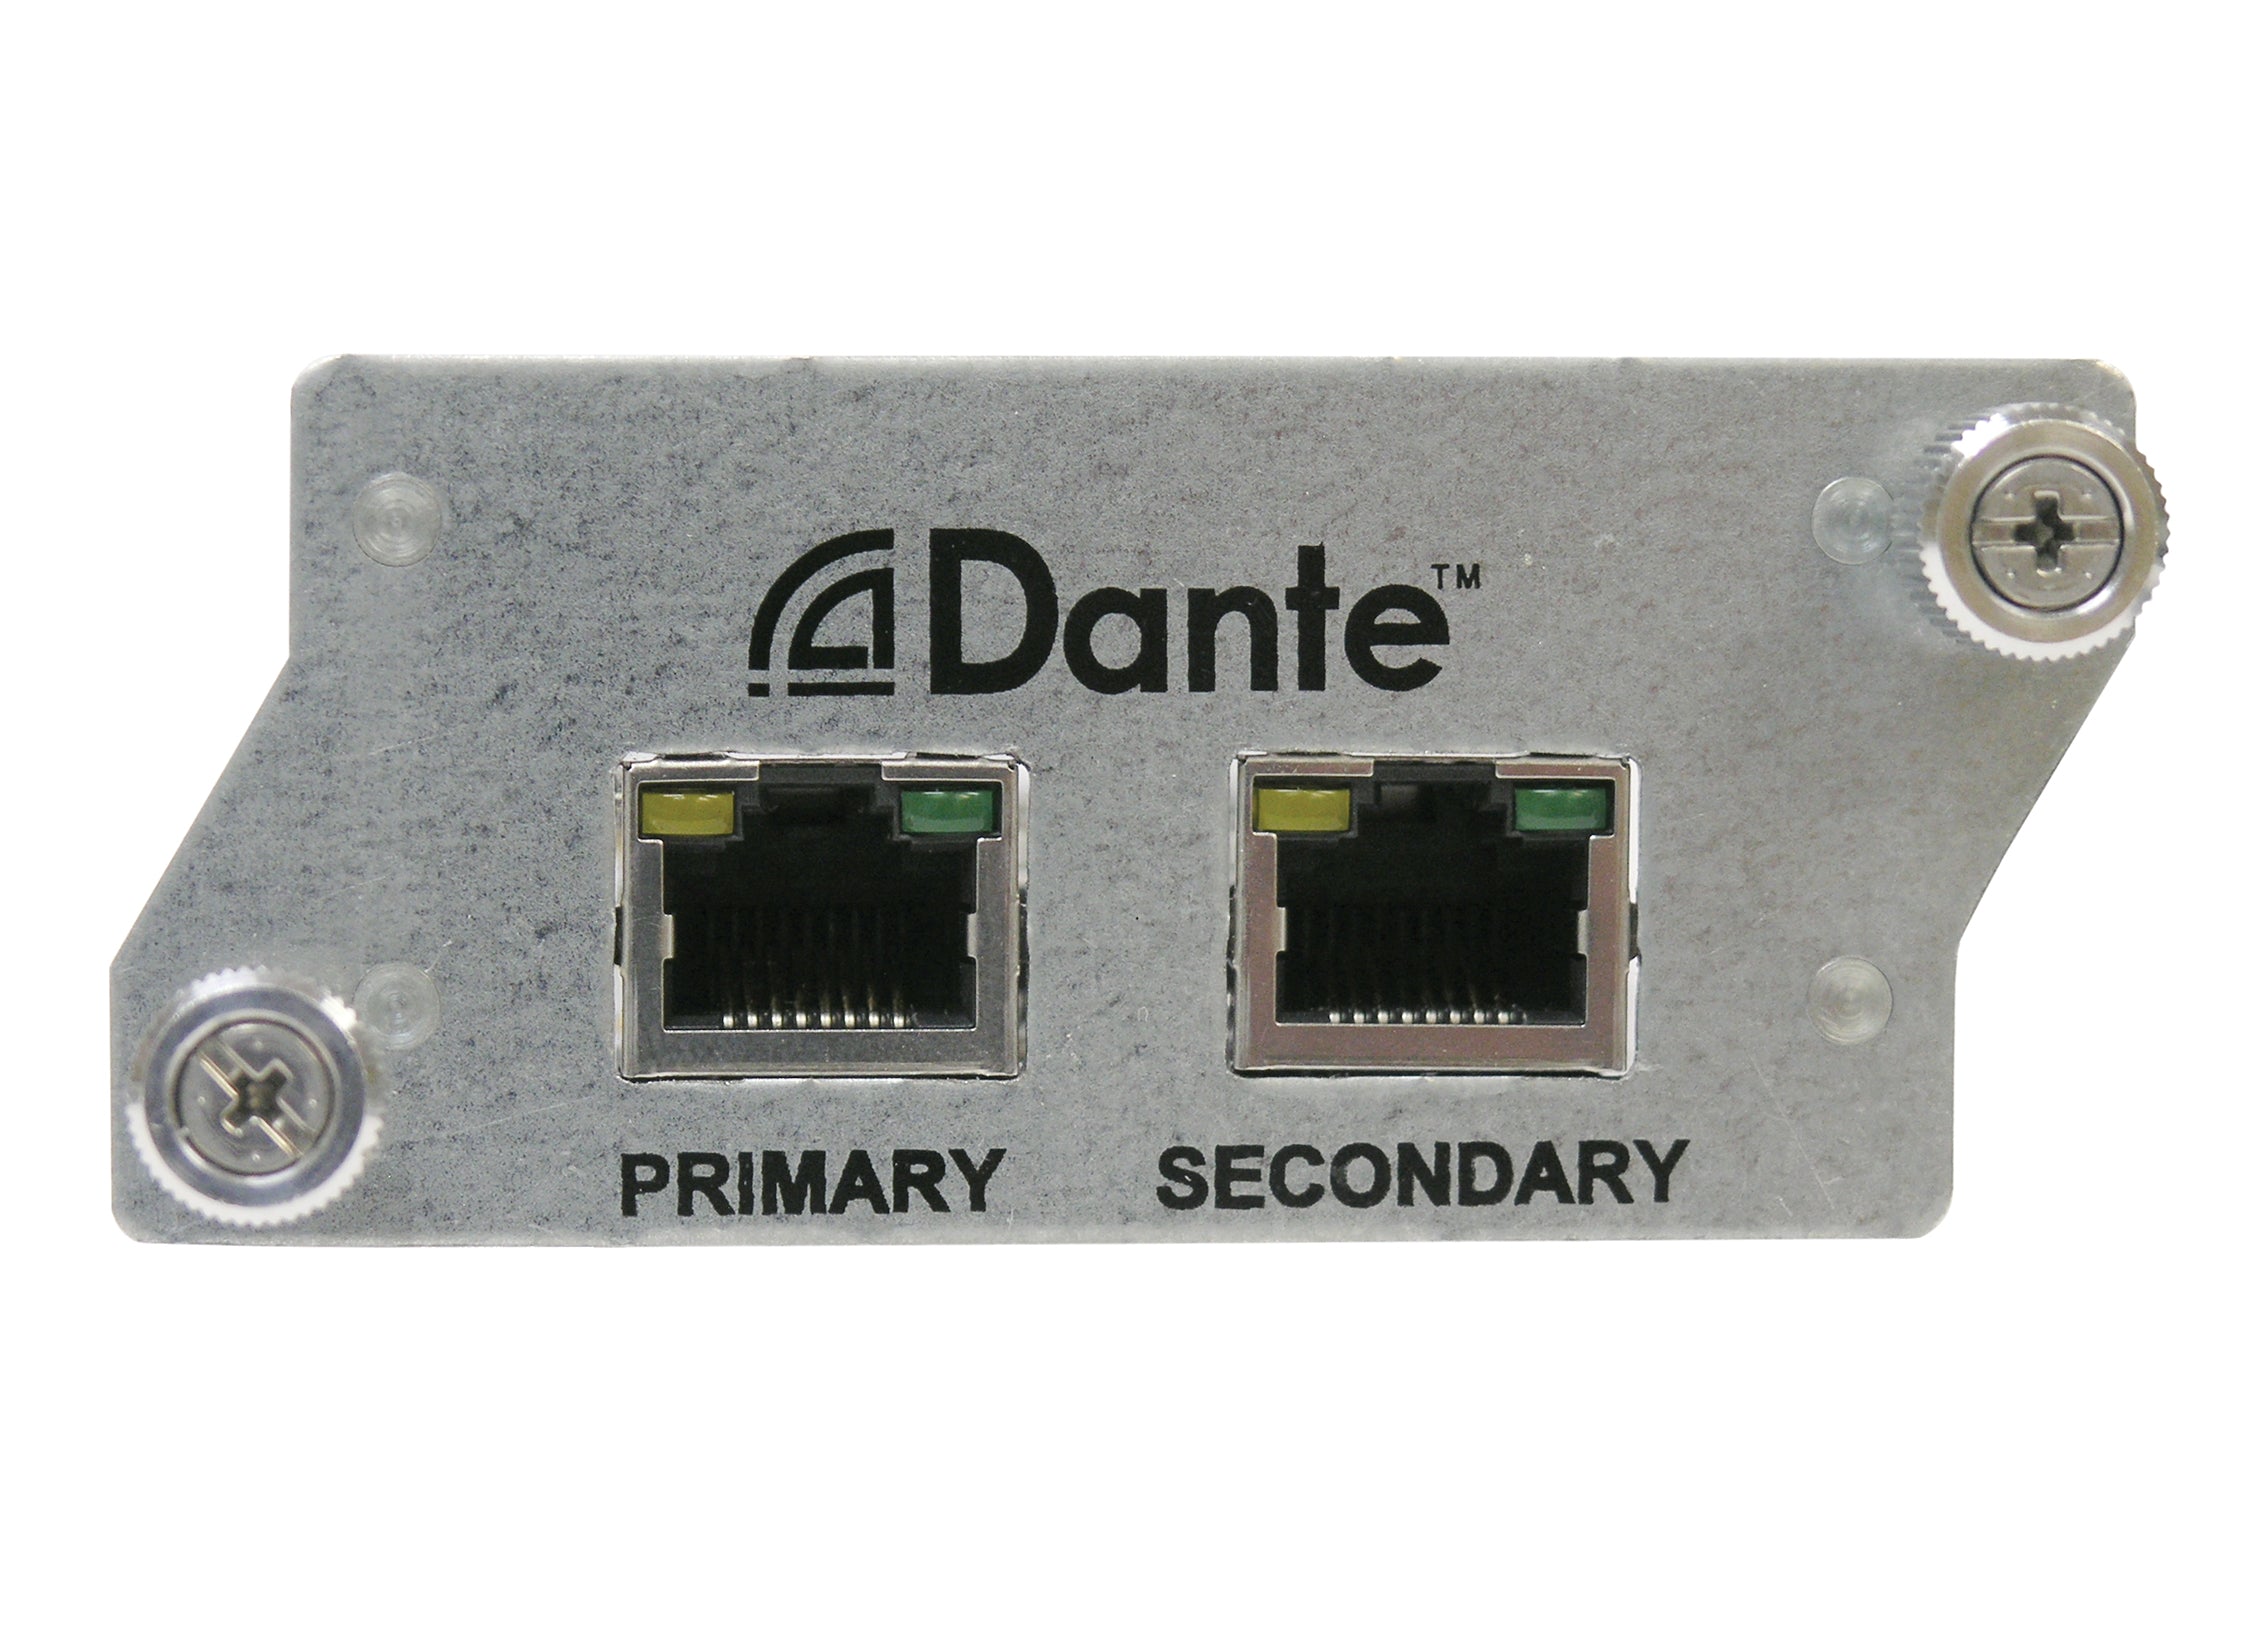 Hear Technologies Dante Card for PRO Hub